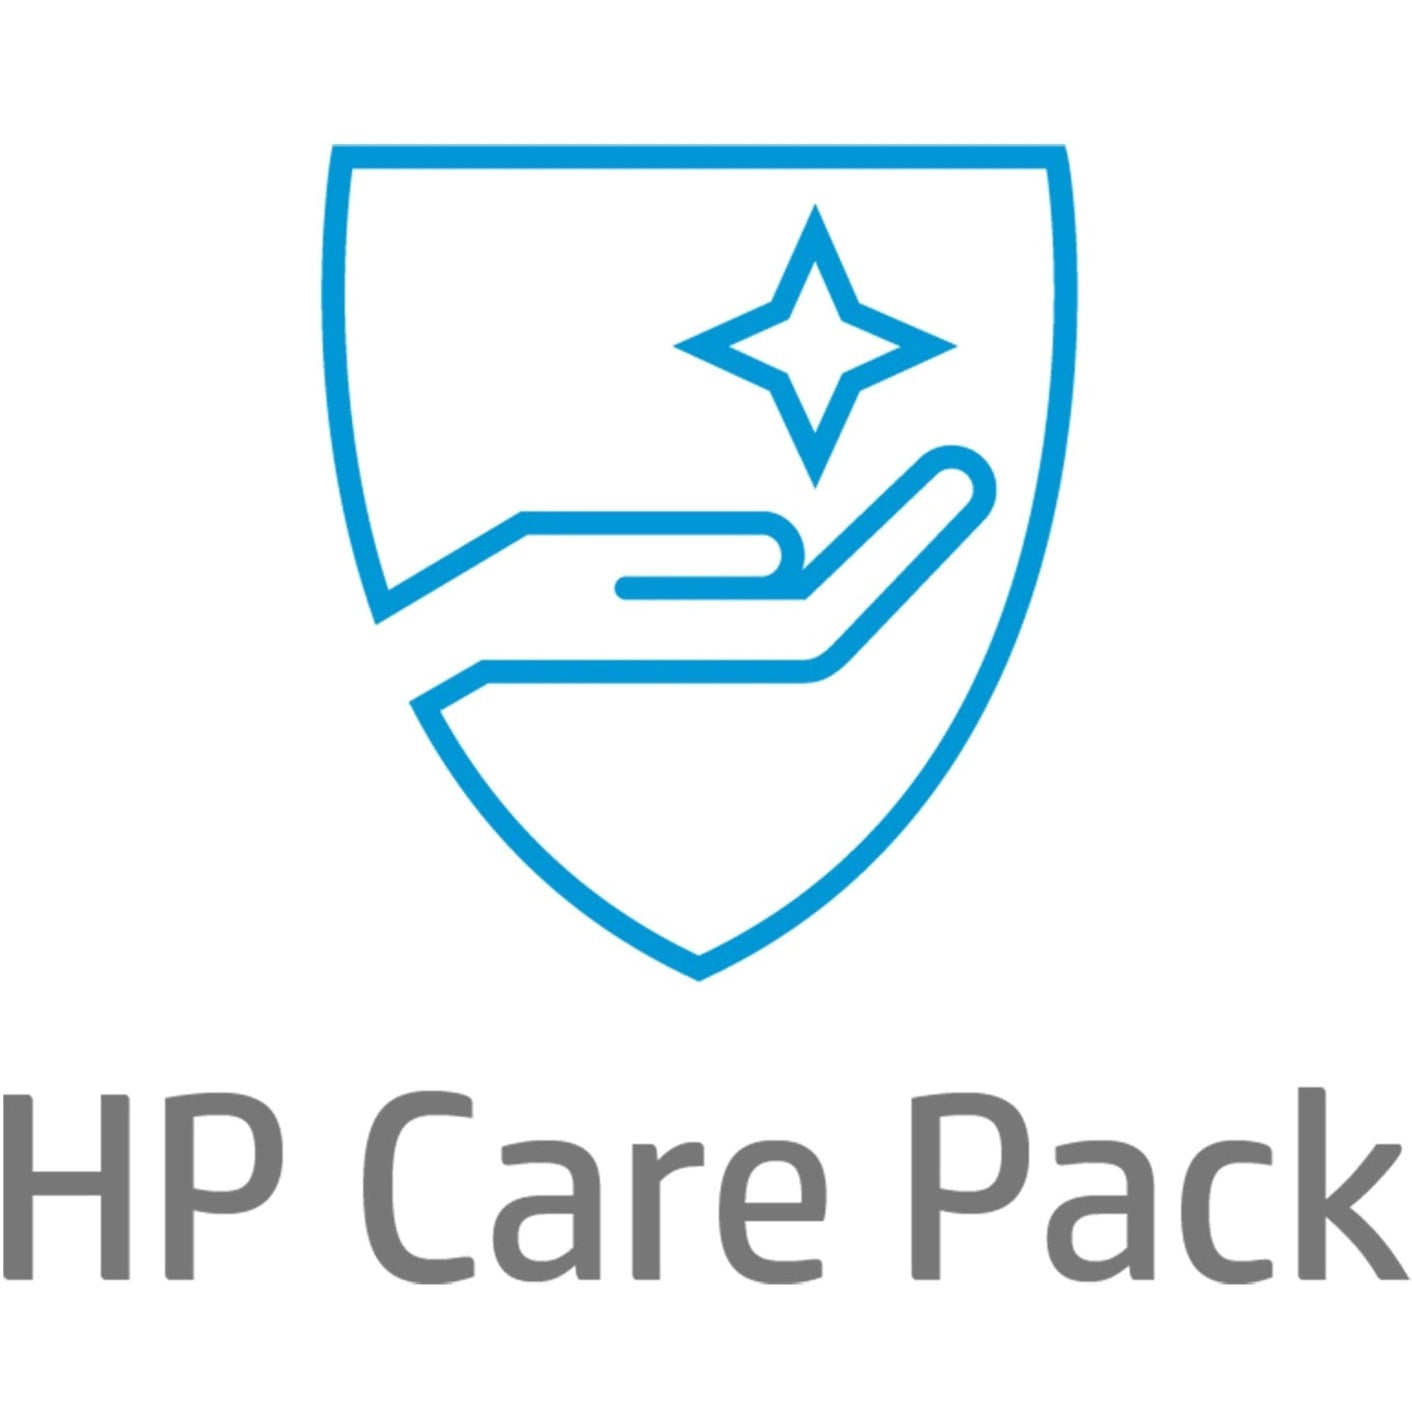 HP Care Pack - 4 Year - Service (UQ834E)